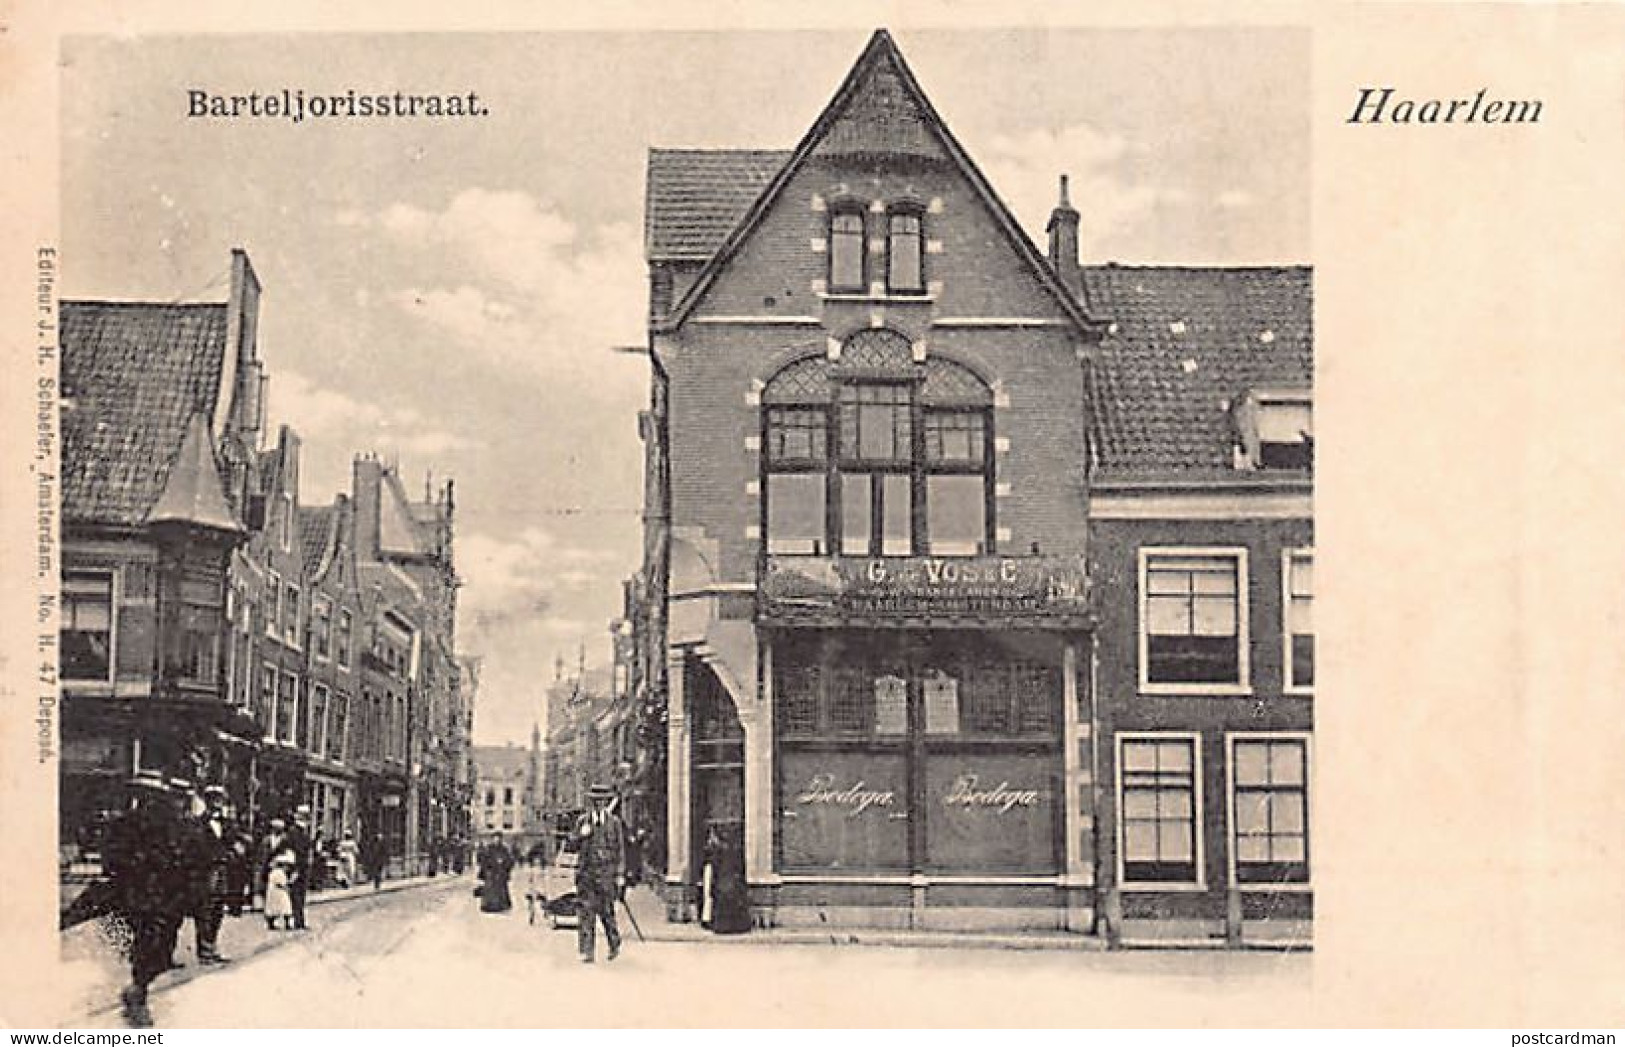 HAARLEM (NH) Barteljorisstraat - Uitg. J.H. Schaefer H 47 - Haarlem